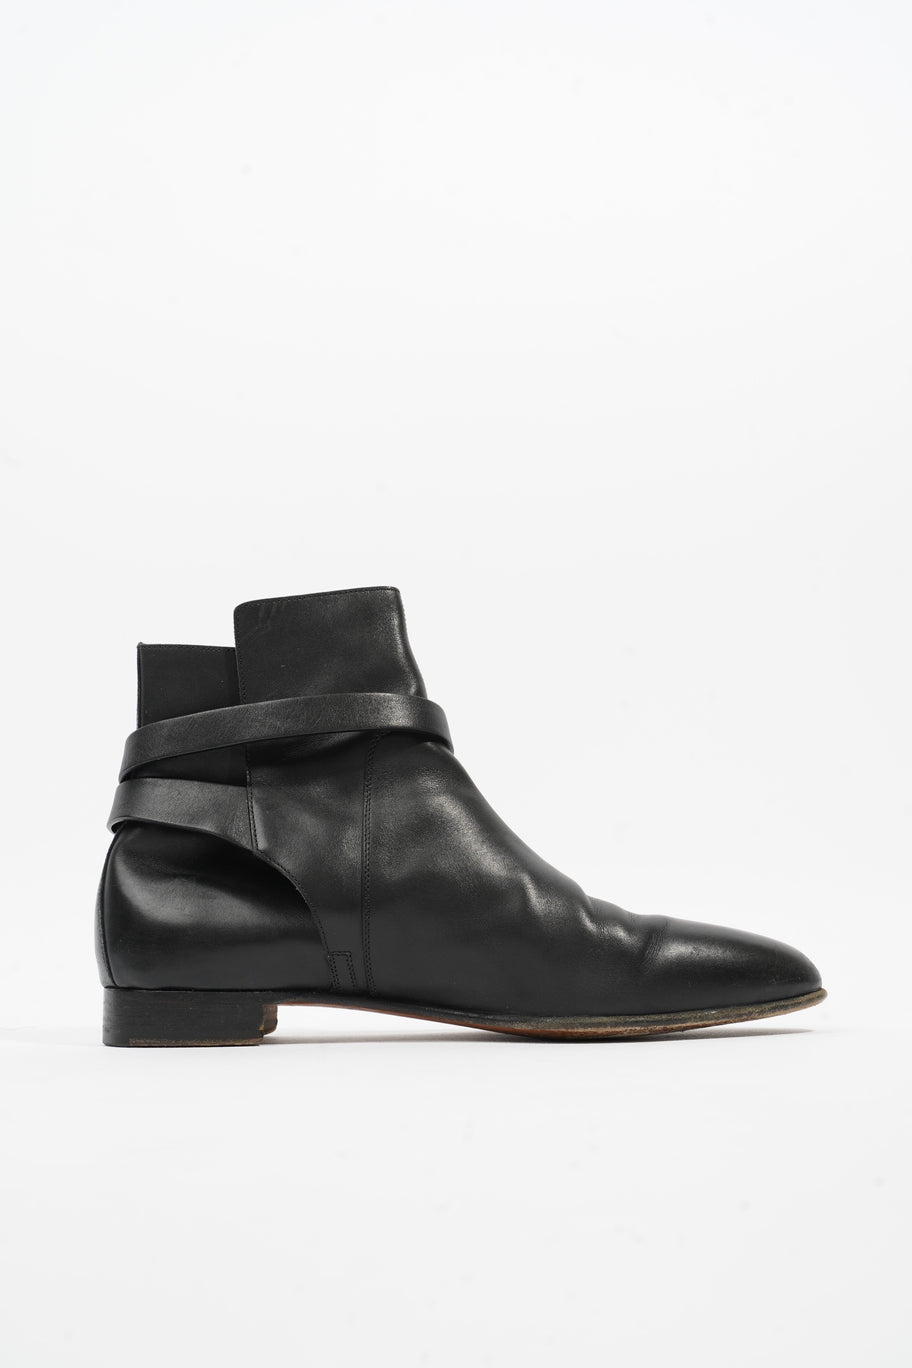 Neo Ankle Boot Black Leather EU 41 UK 8 Image 4